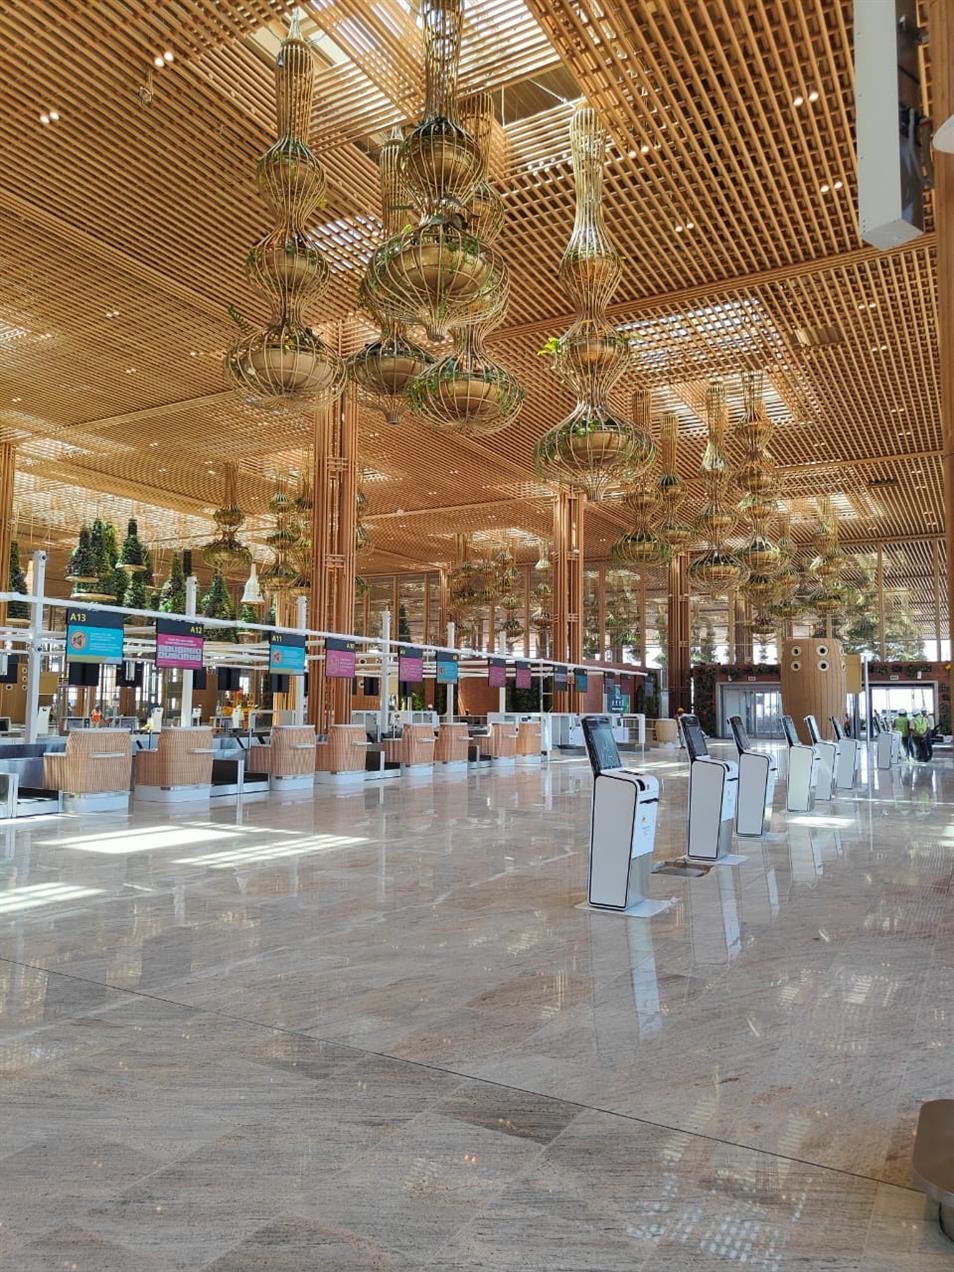  Terminal -2, Bangalore International Airport